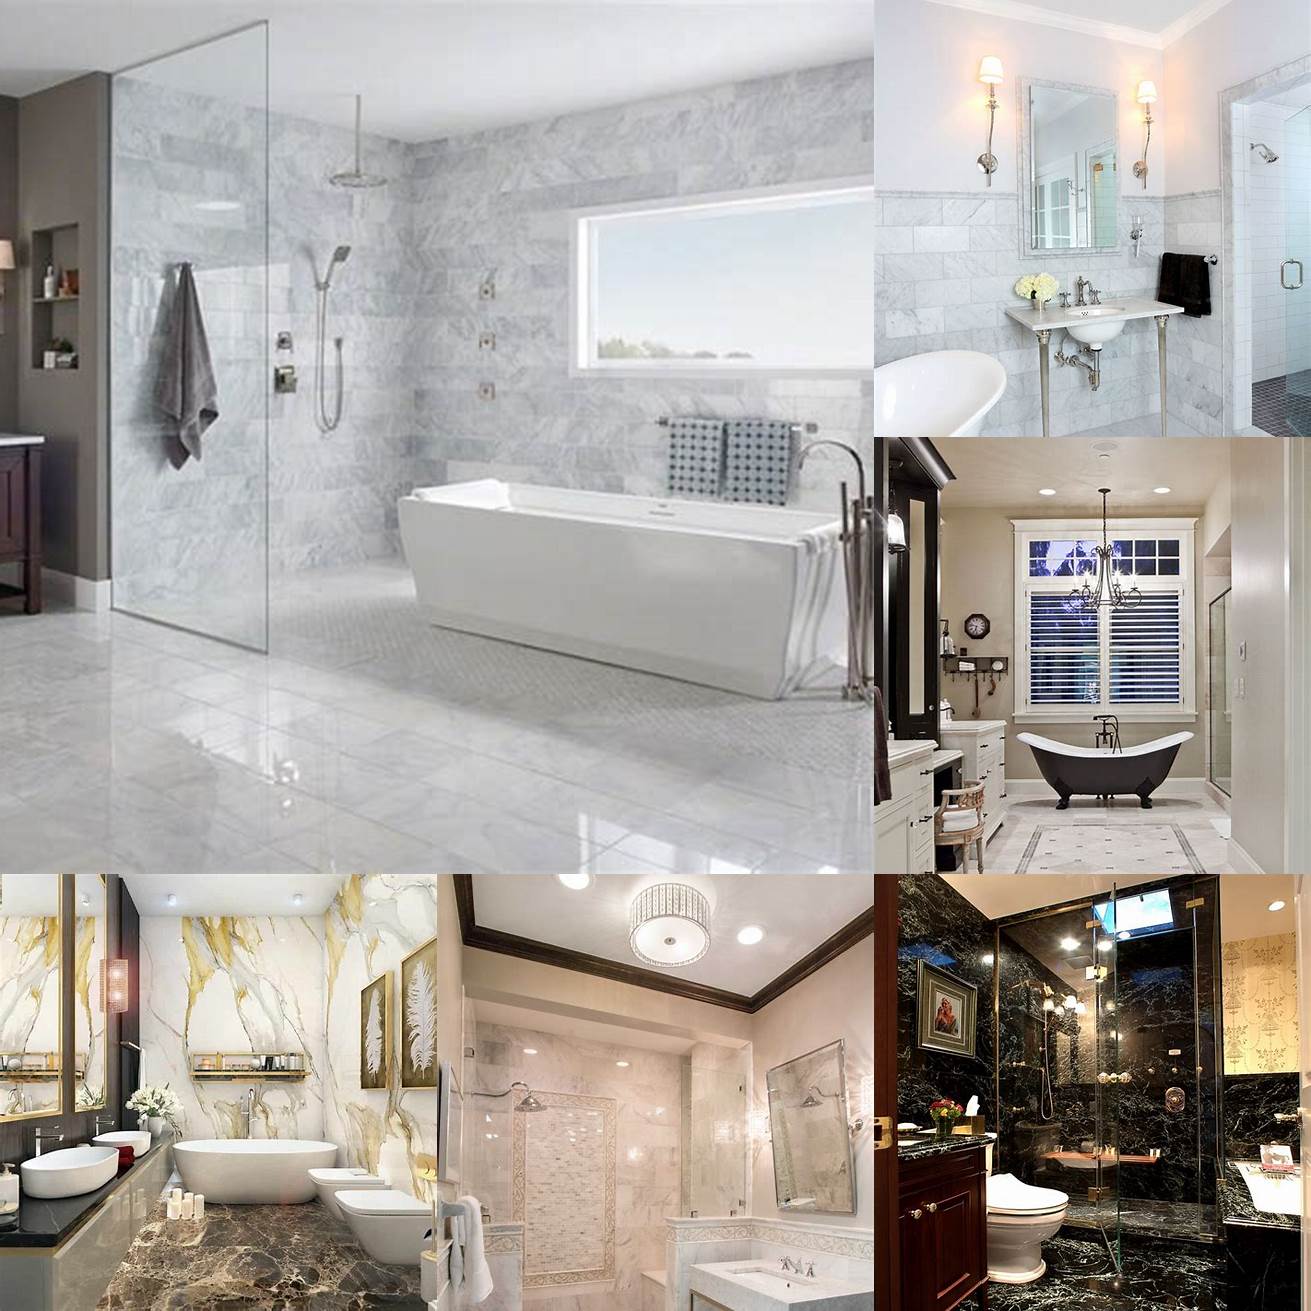 Marble floor tiles give an elegant look to your bathroom